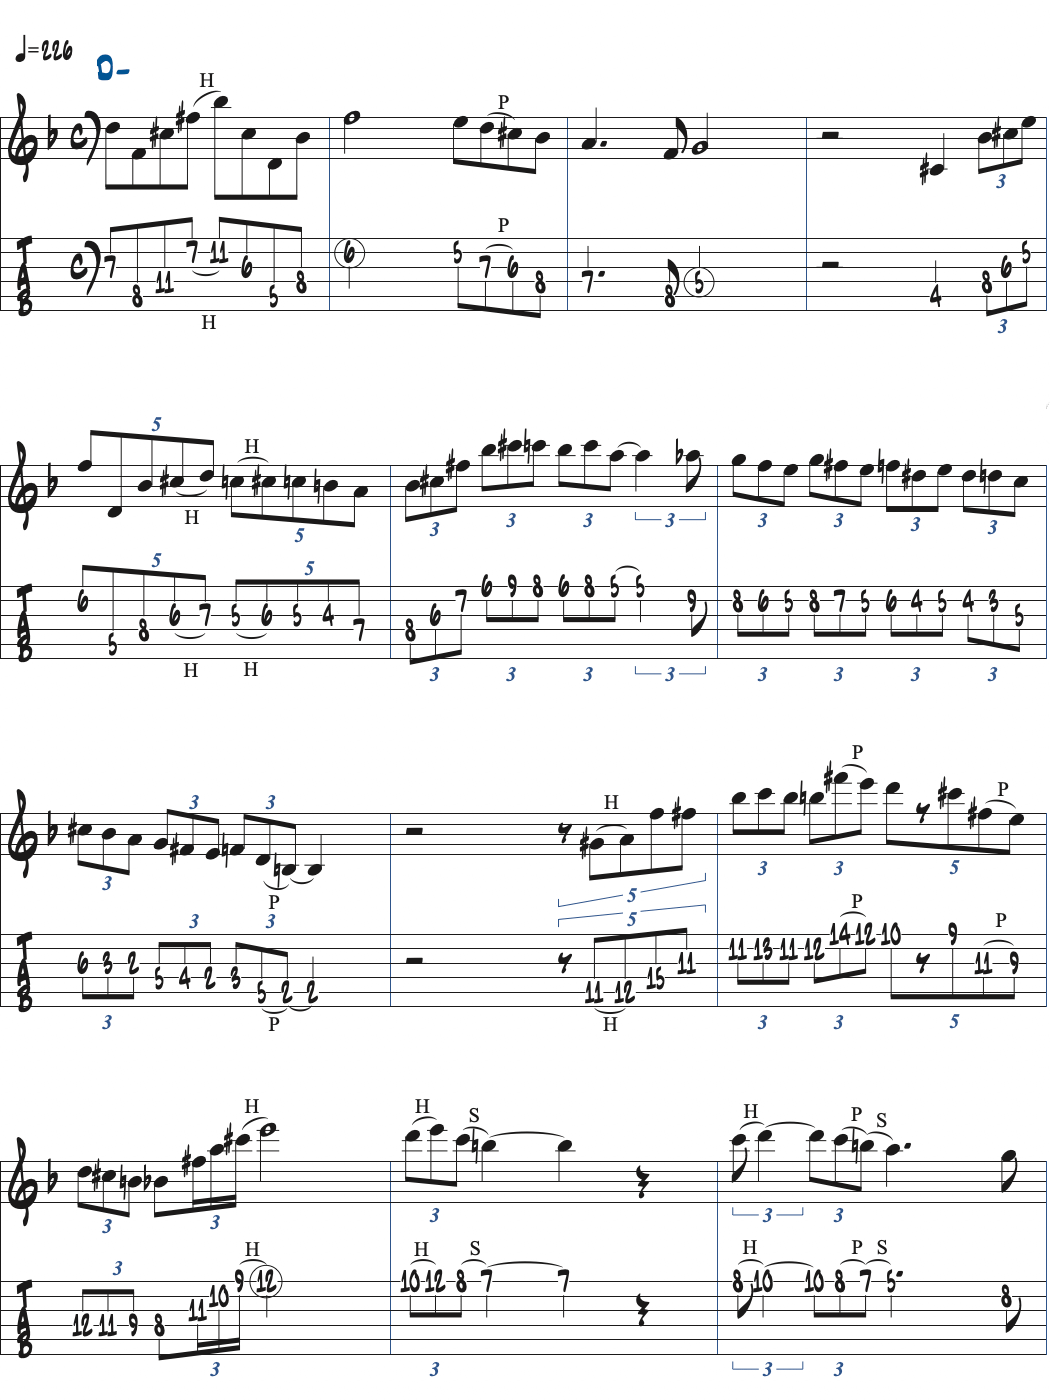 Cecil Alexanderが弾くオーグメントスケールアドリブ例楽譜ページ1